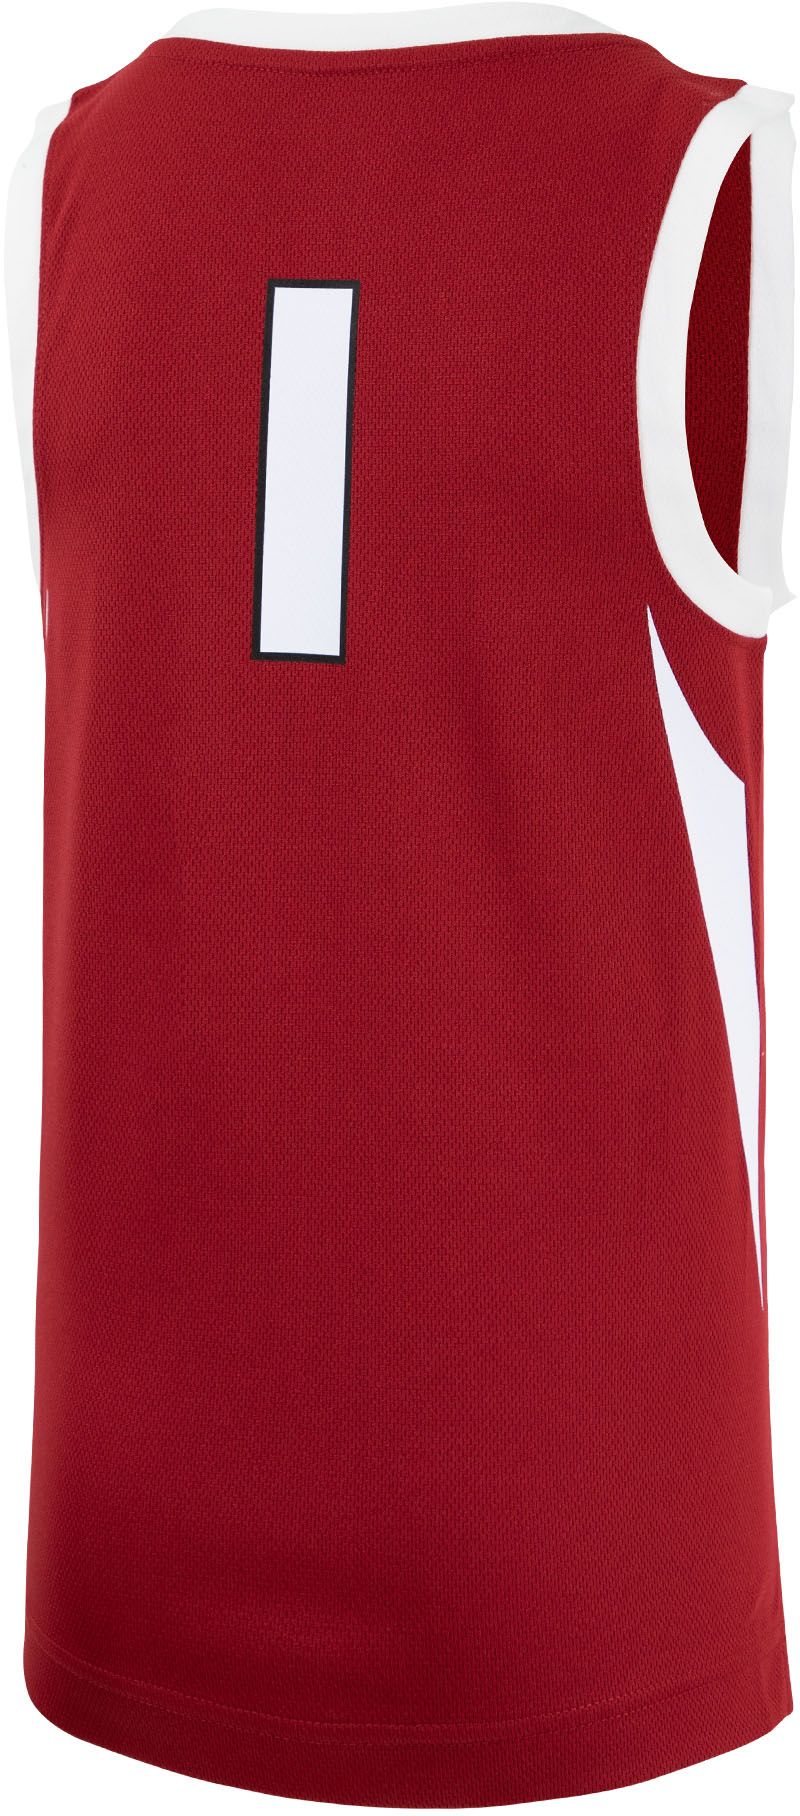 Arkansas Razorbacks basketball MVP jersey